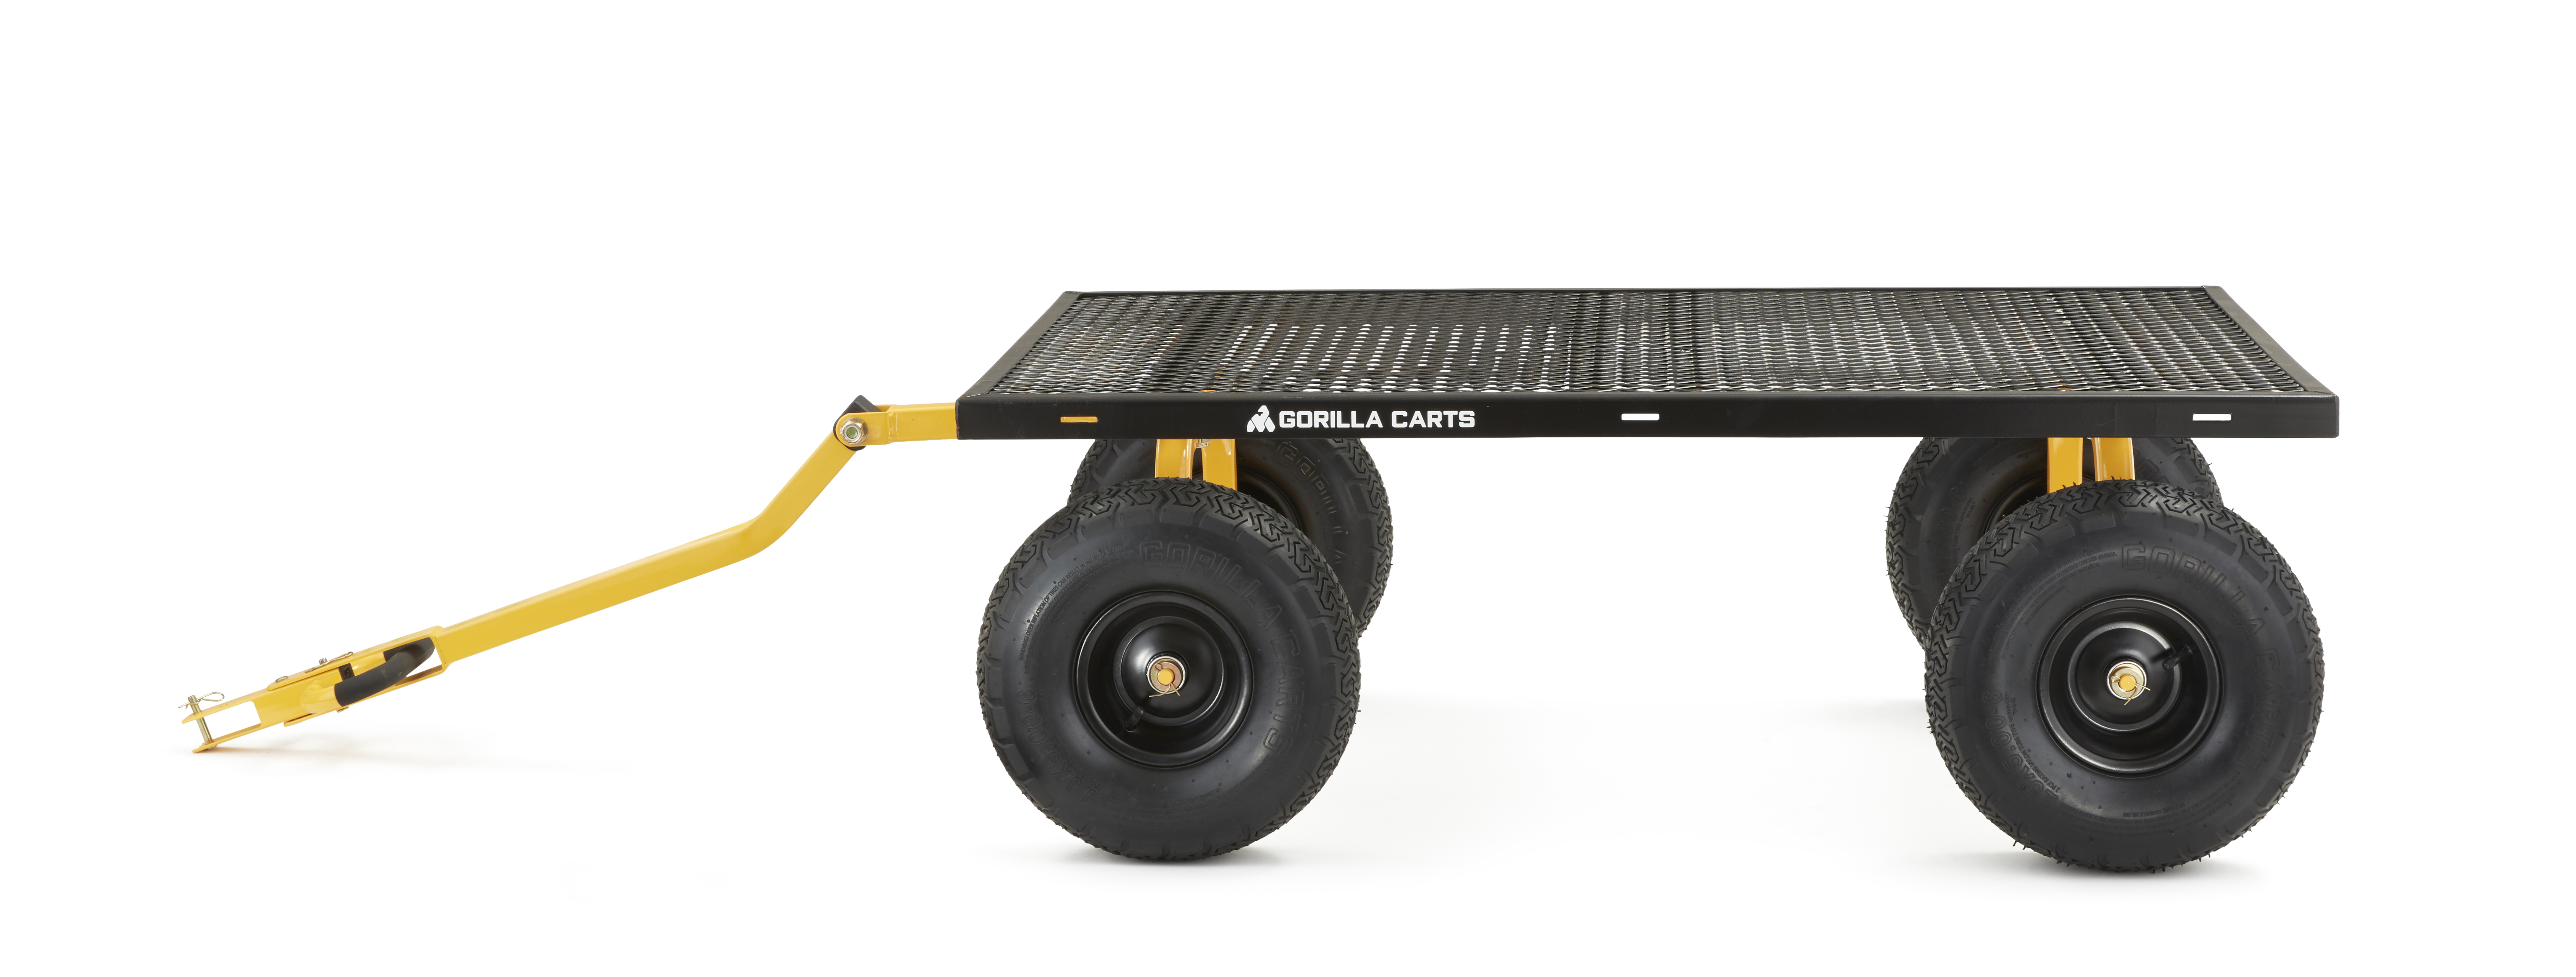 Gorilla Carts GOR1400-Com 1400-lb. Heavy-Duty Steel Utility Cart, 15" Tires, 52" x 34" Steel Bed - image 2 of 12